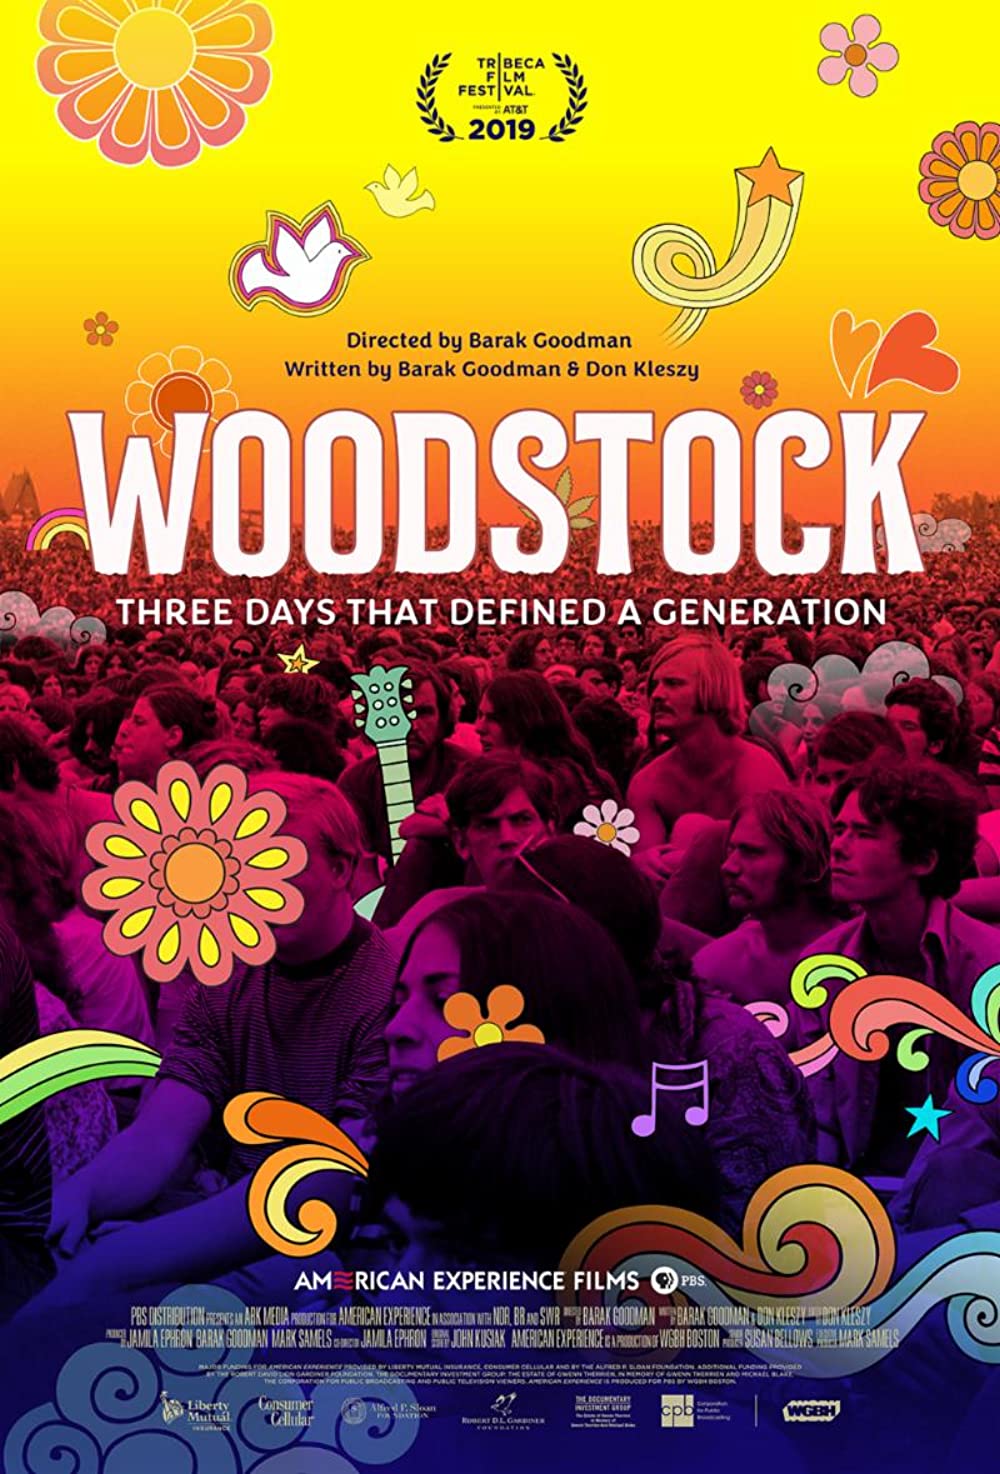 Filmbeschreibung zu Woodstock